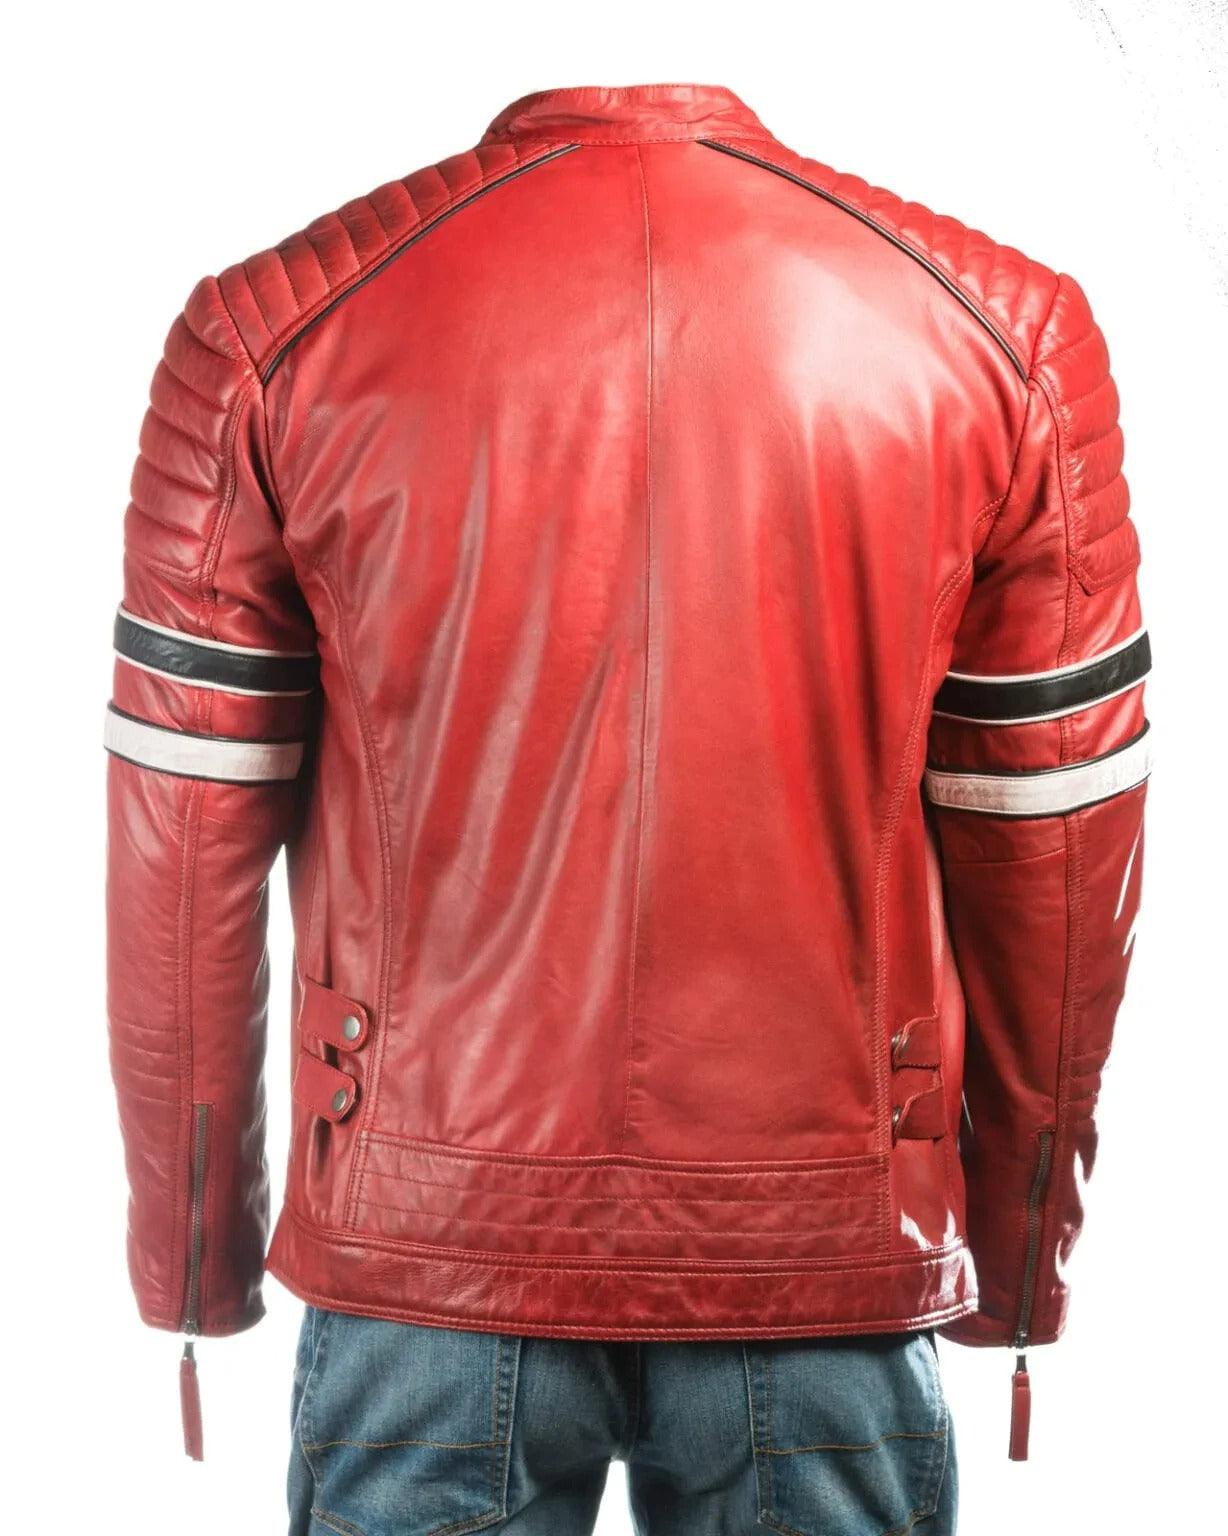 Men’s Red Racing Biker Style Leather Jacket-3